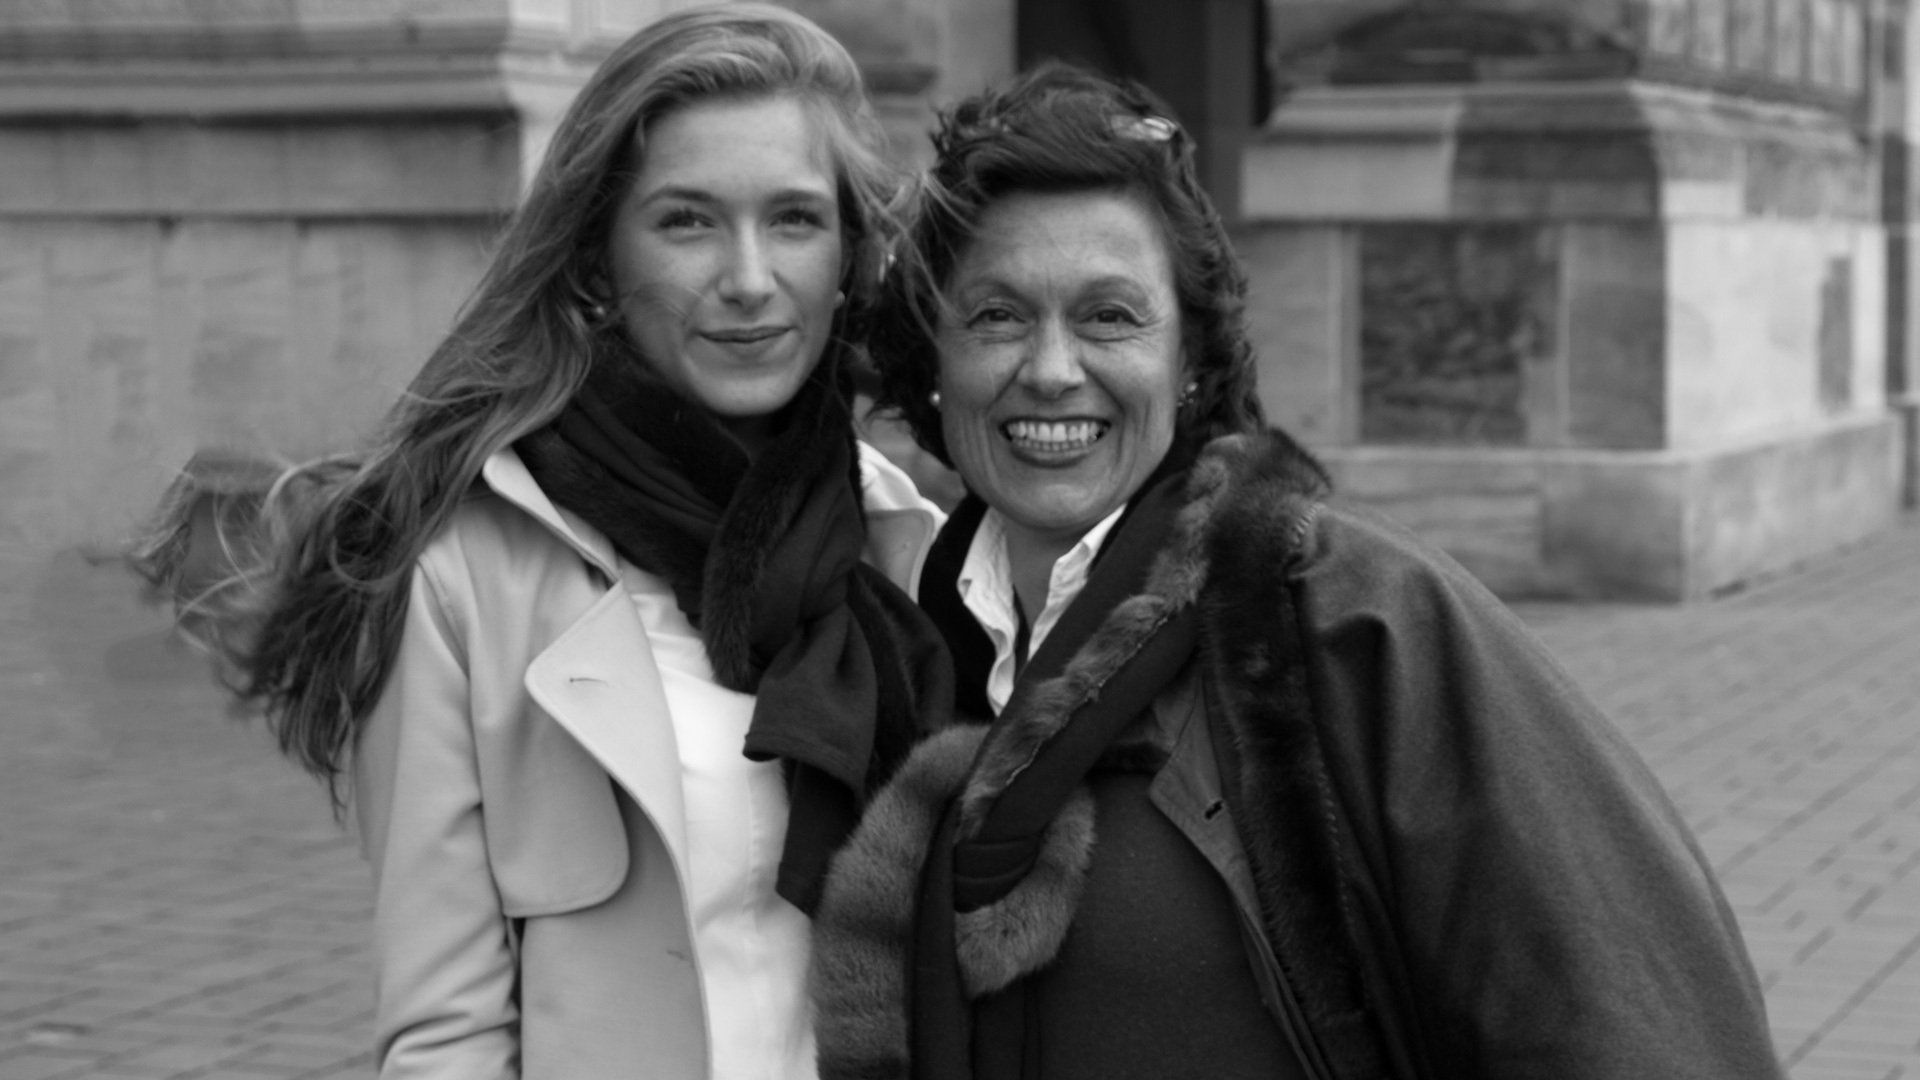 Ea-Theresa Lil和Urte Viola Bötel - LIL设计公司的创始人和设计师